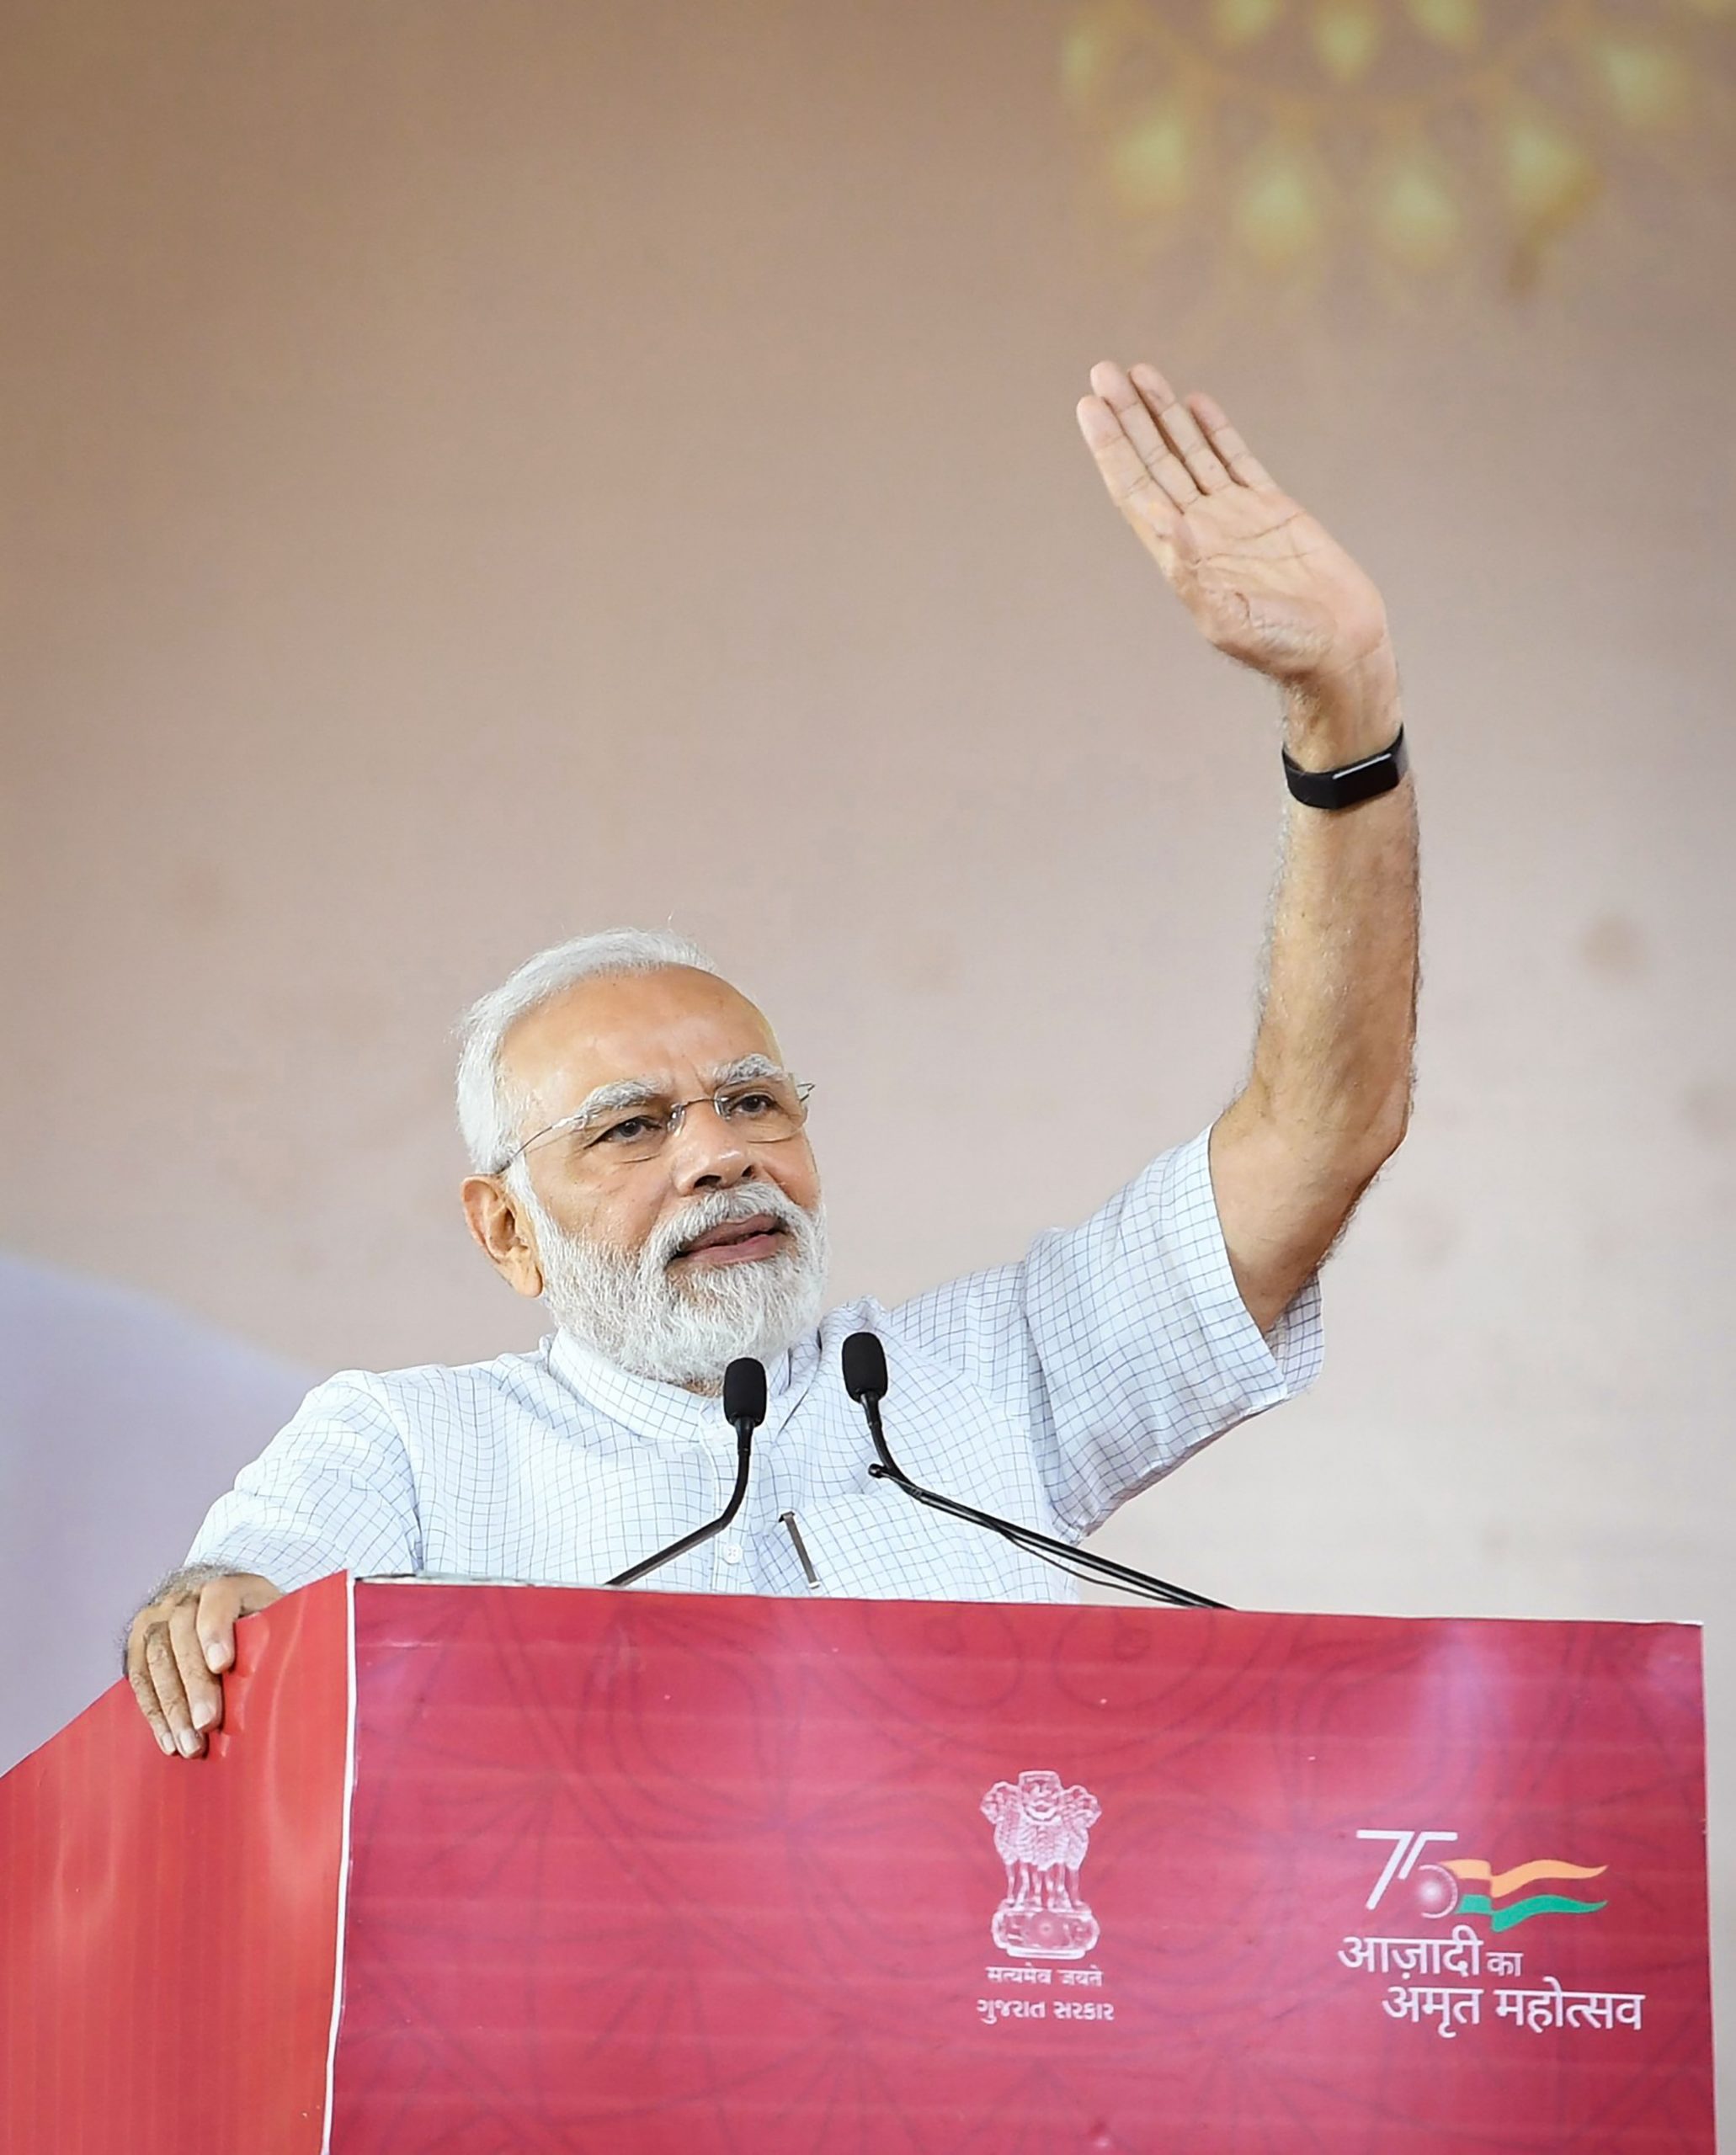 Prime Minister Narendra Modi rolls out 5G in India